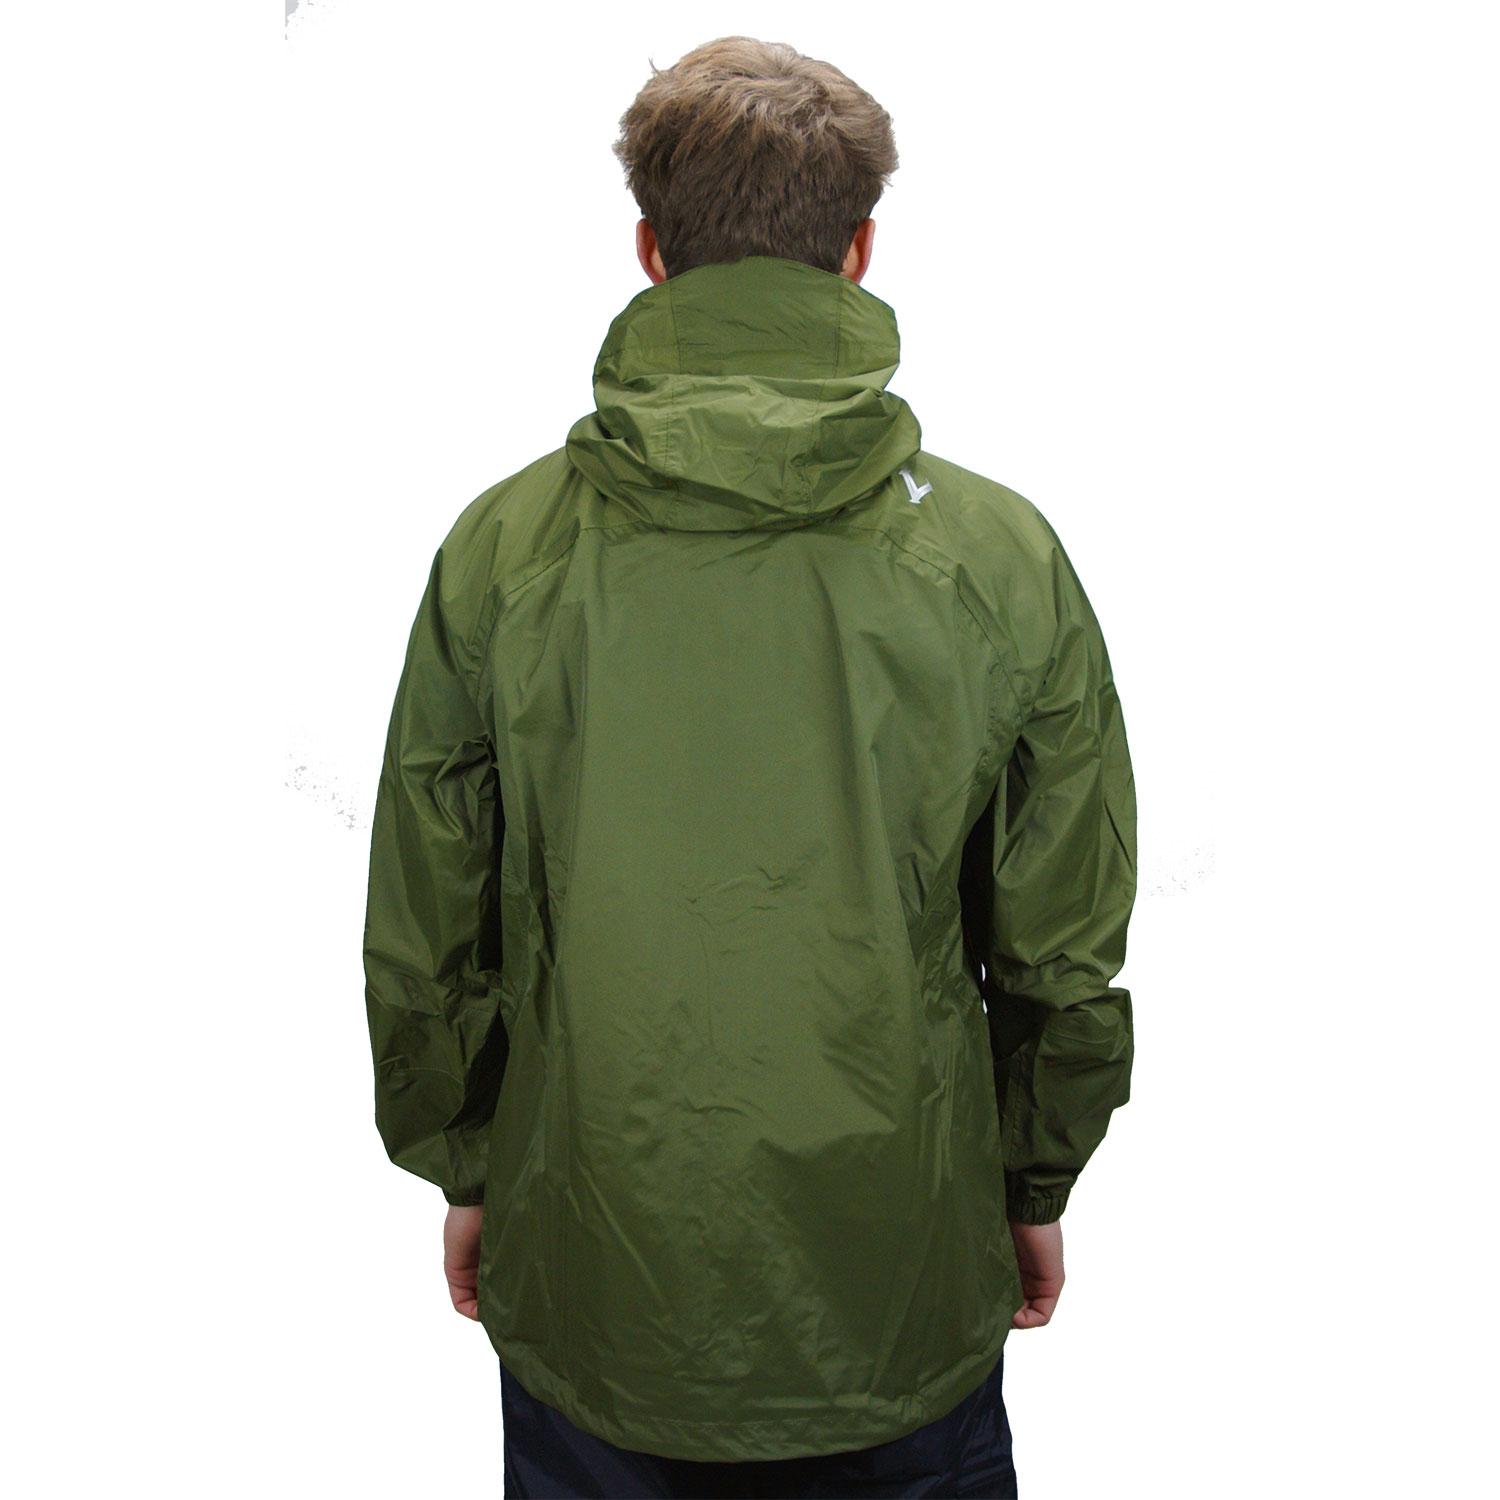 Men's Ocean Watch Rain Jacket by Vallation Outerwear